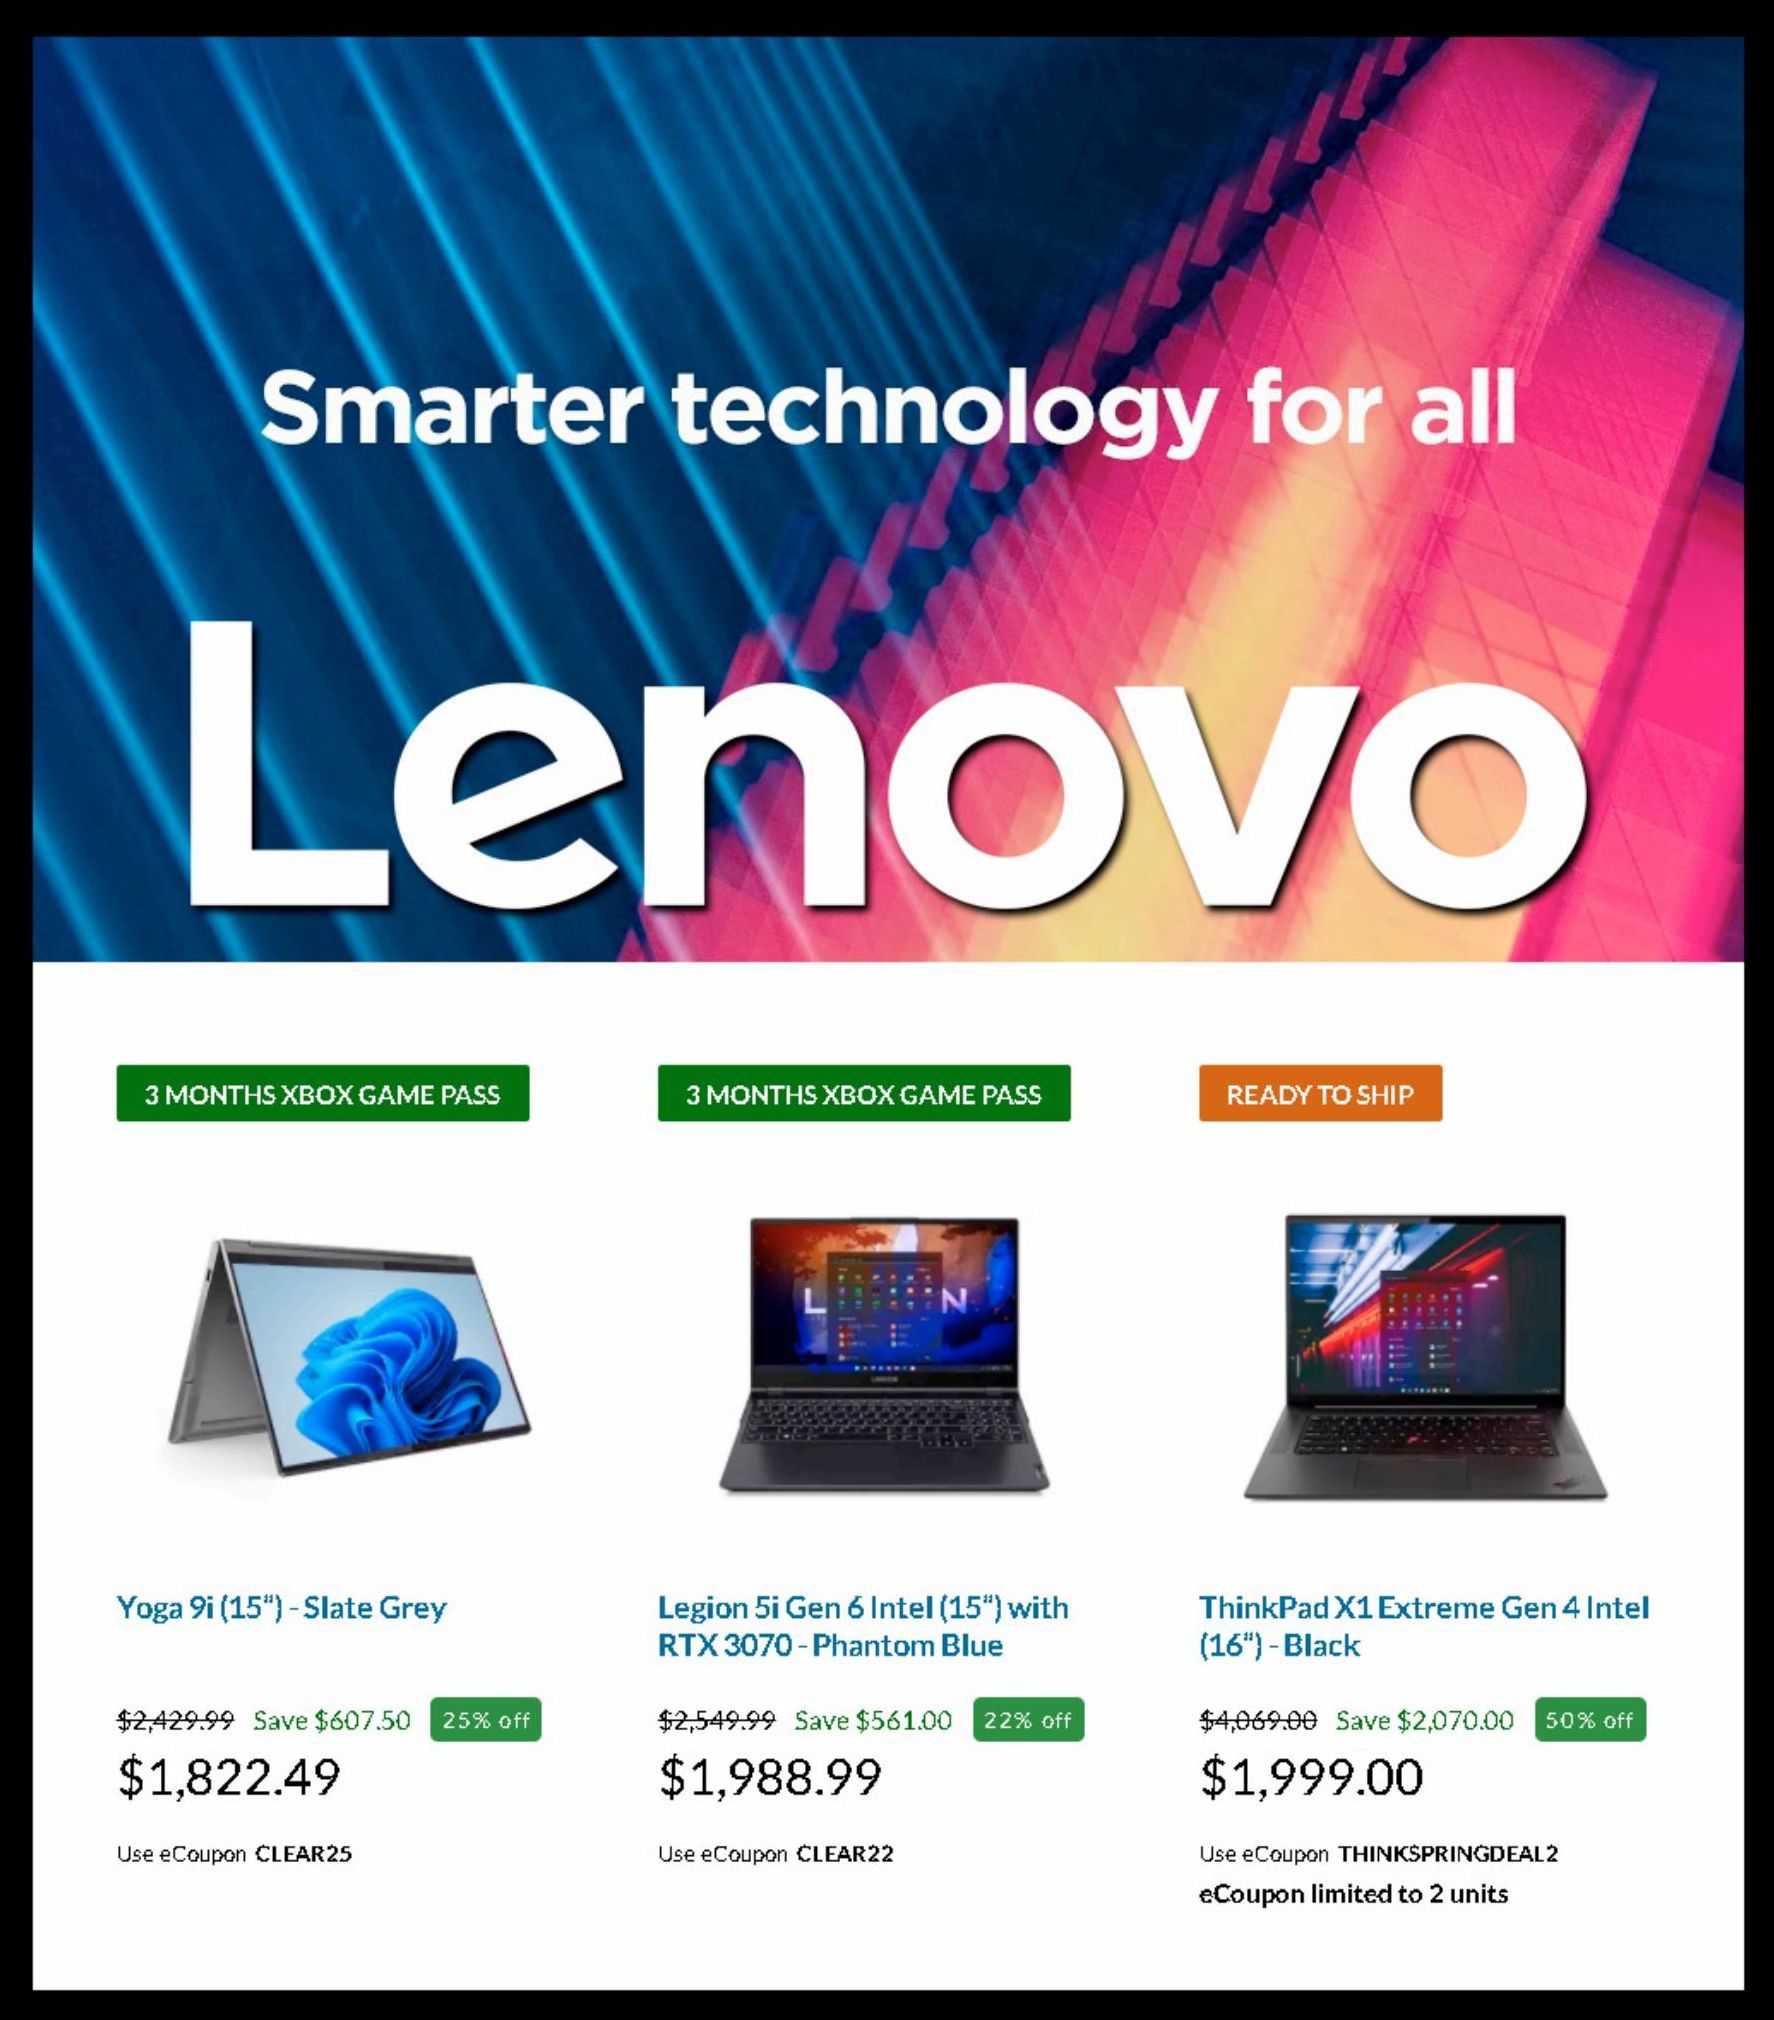 Season offers in Lenovo